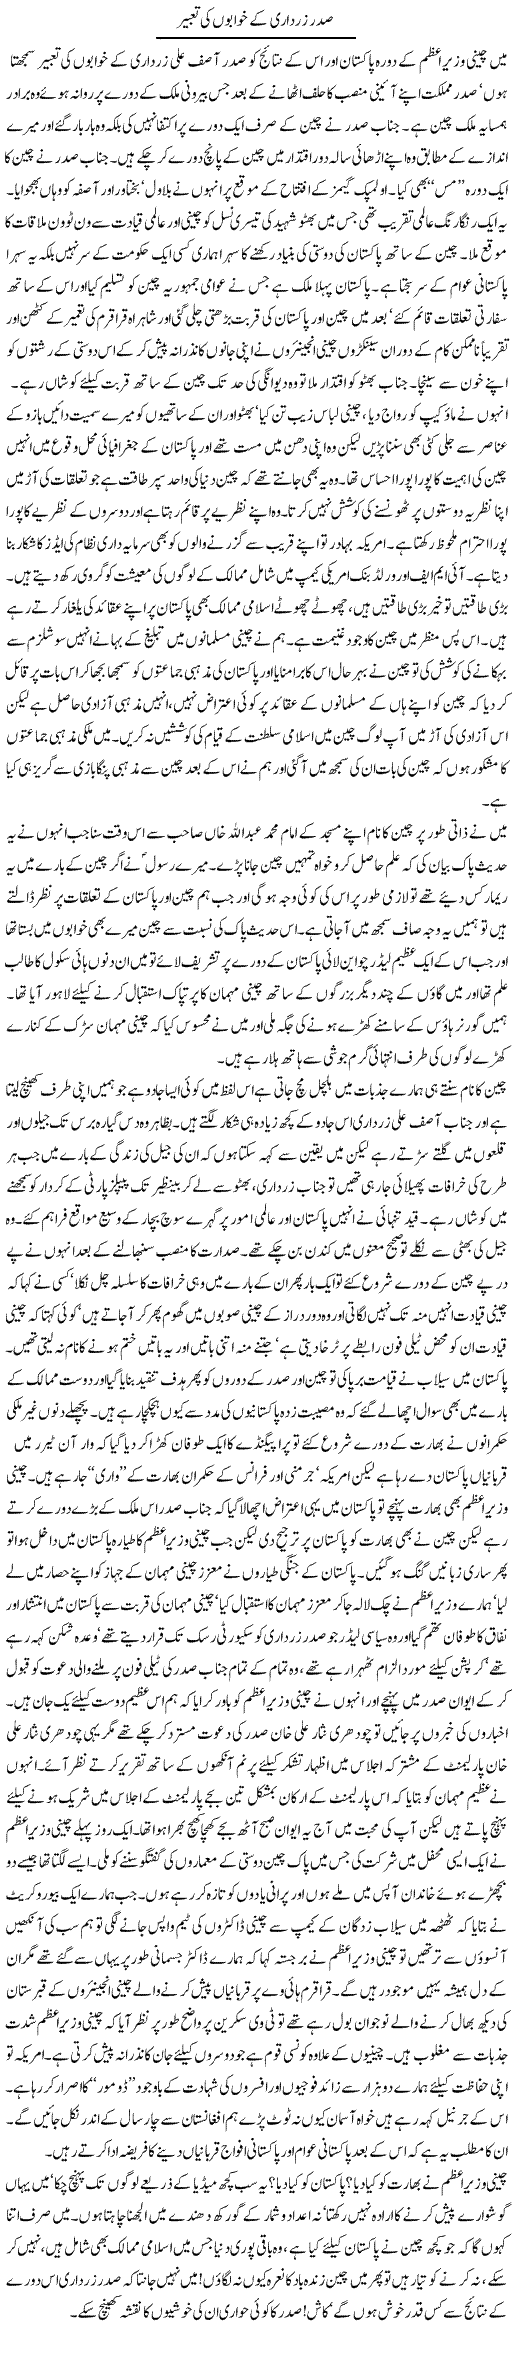 Dreams of Zardari Express Column Asadullah Galib 22 December 2010